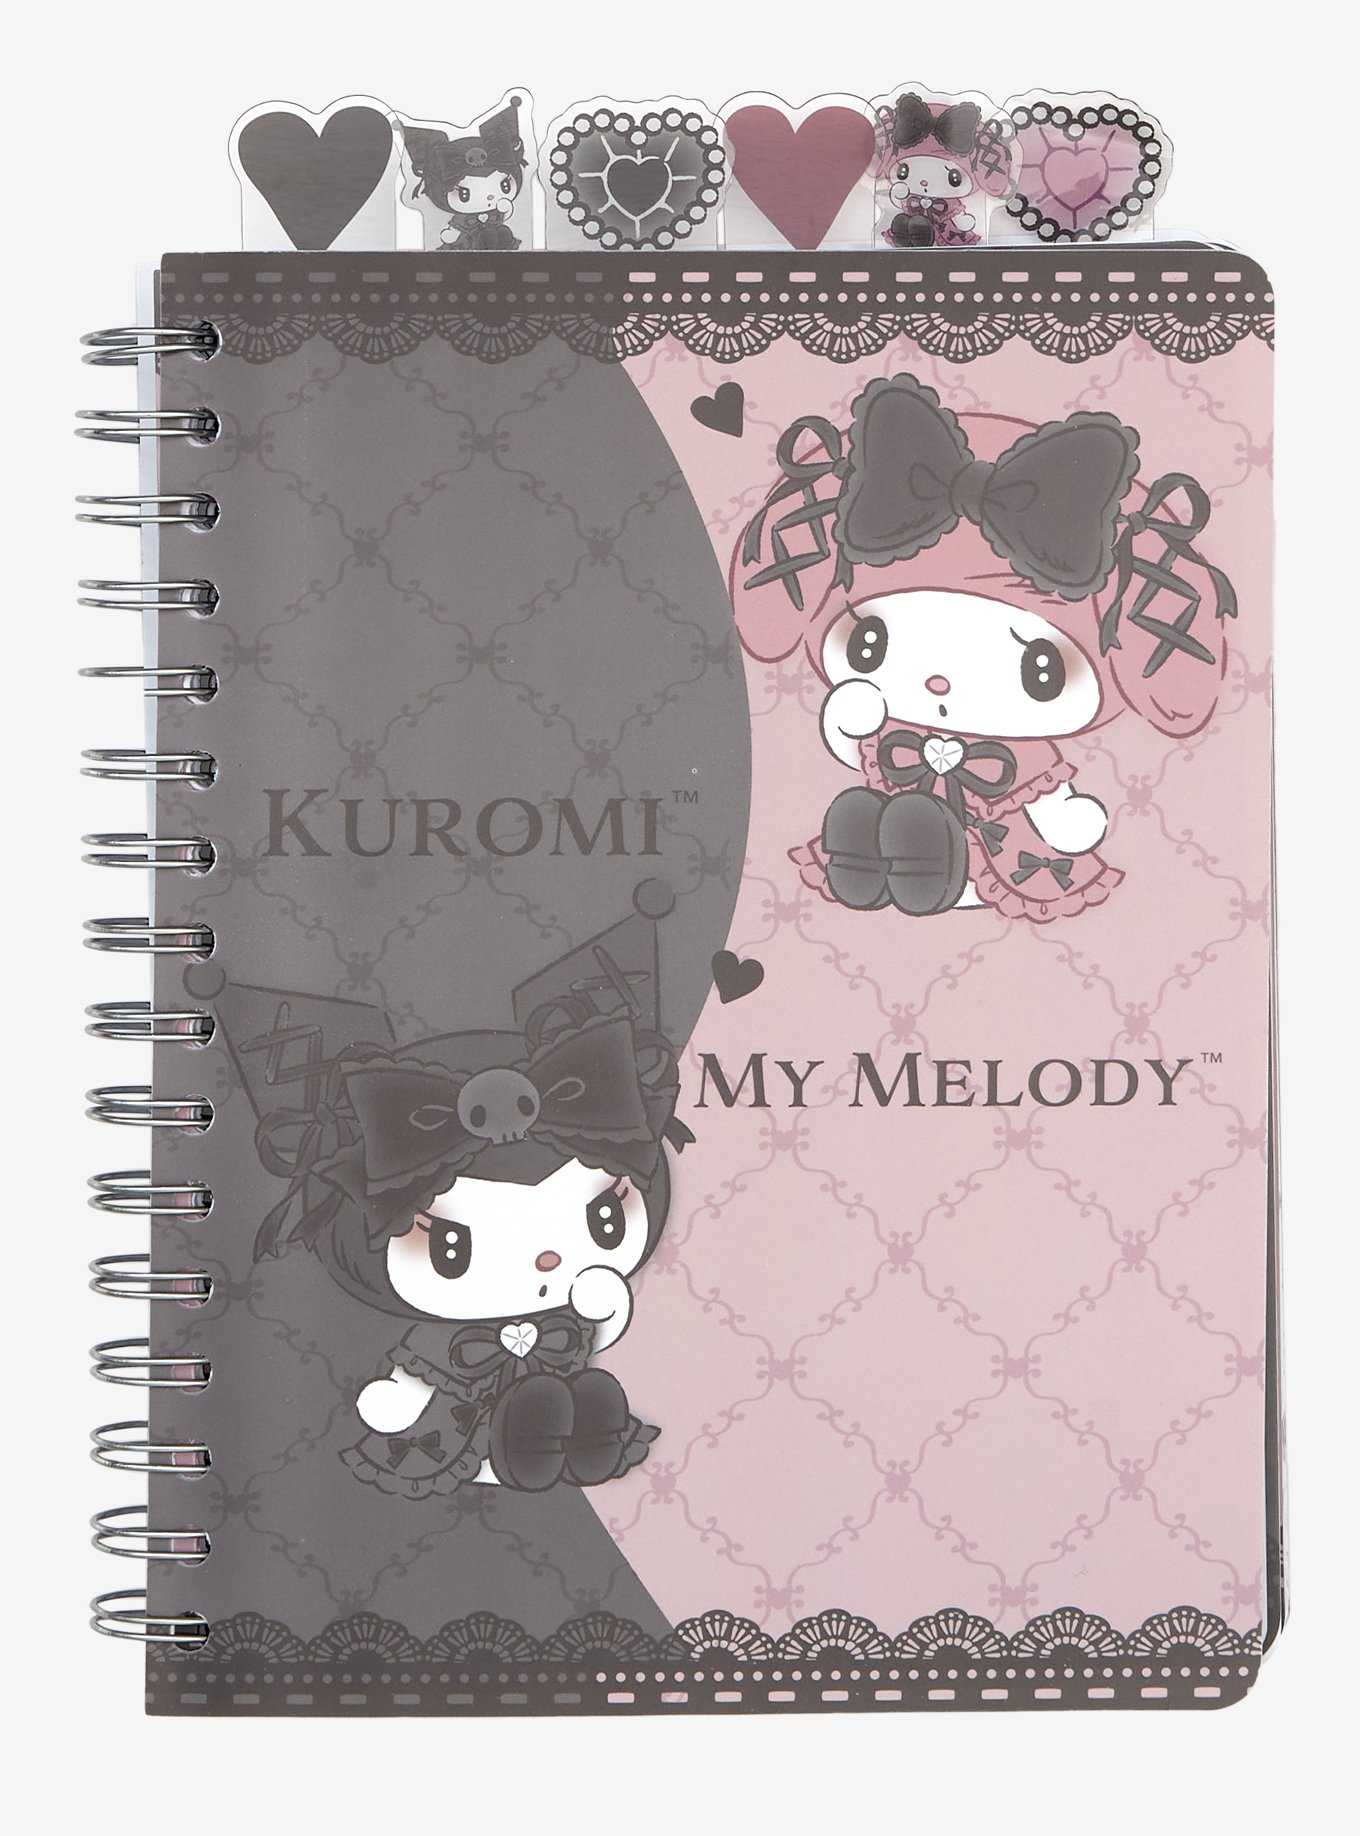 I got the cutest Kuromi notebook today! : r/sanrio